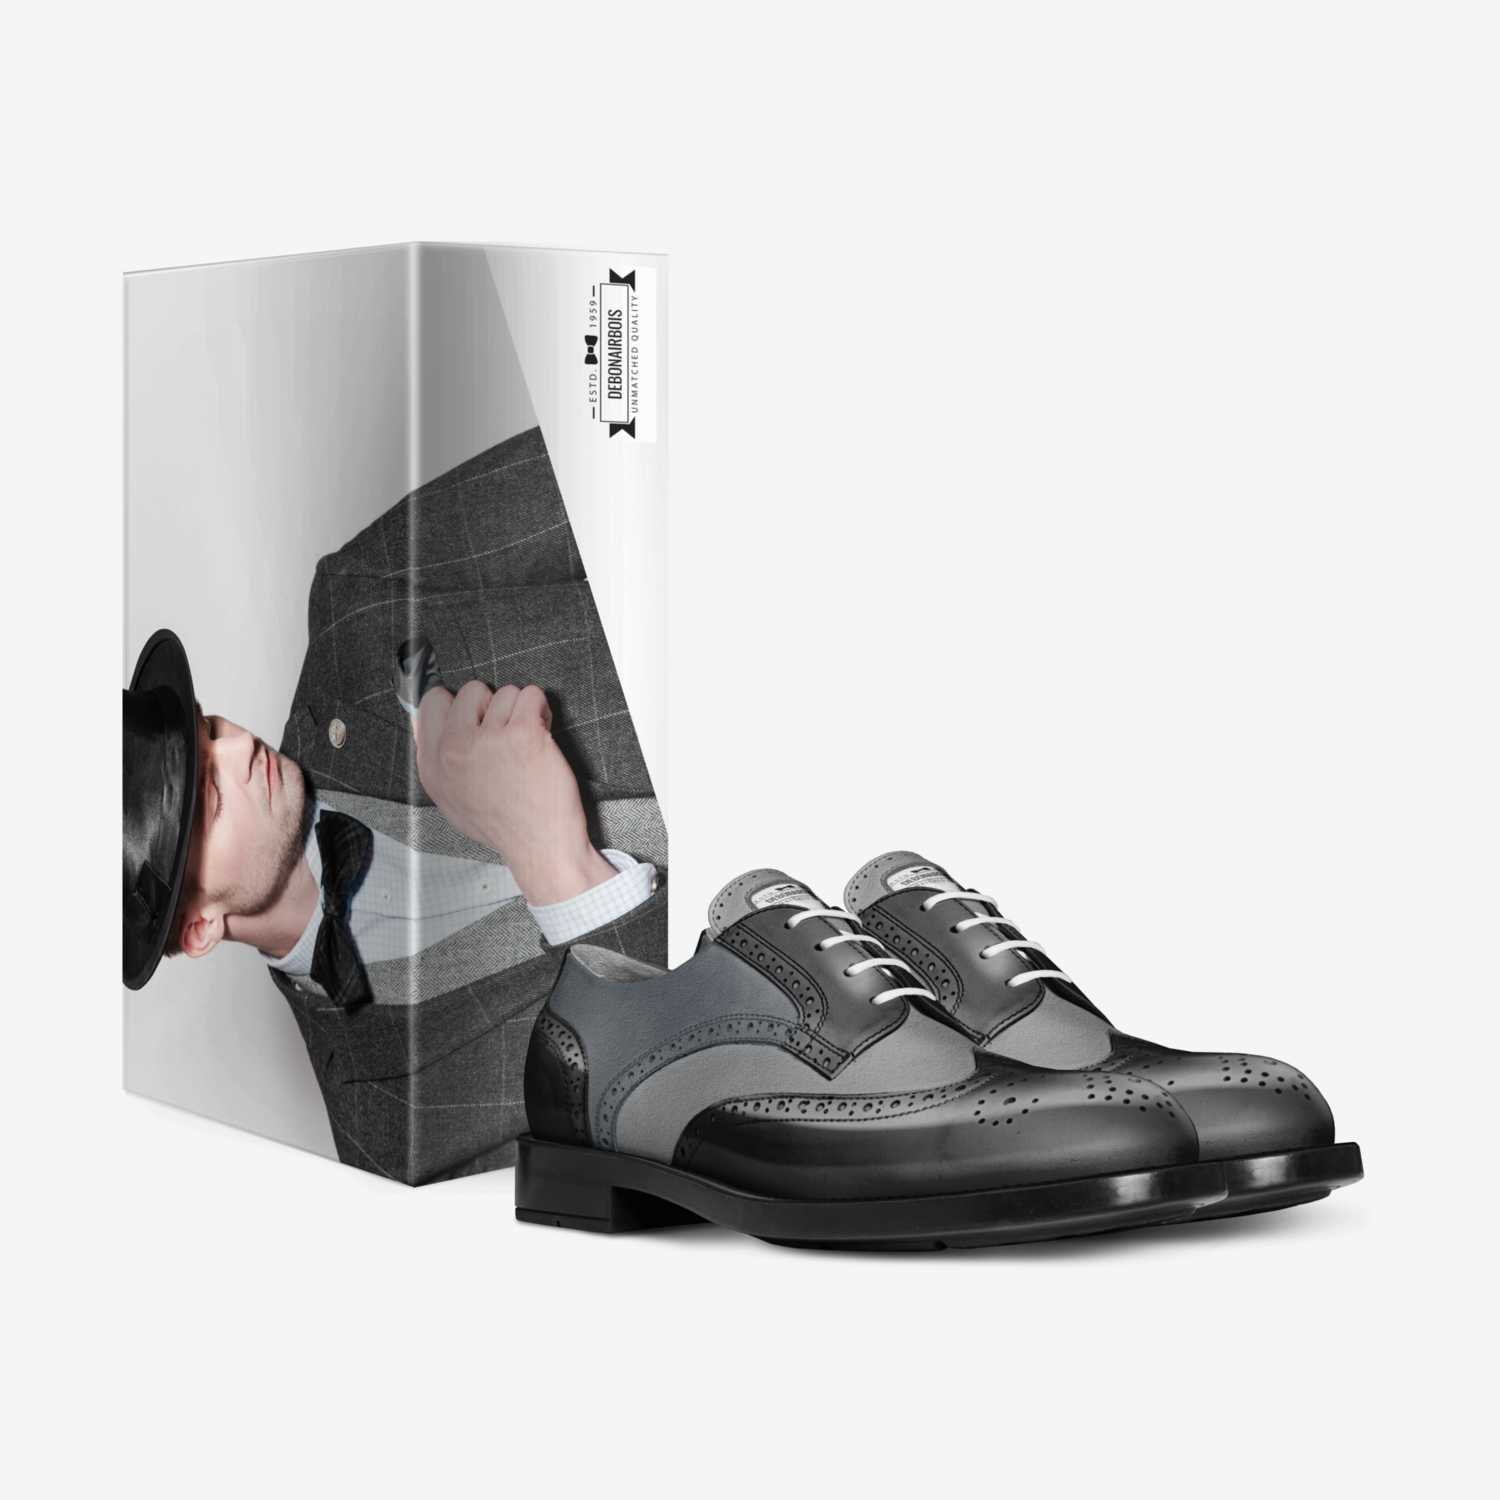 DEBONAIRBOIS custom made in Italy shoes by Natasha Price | Box view